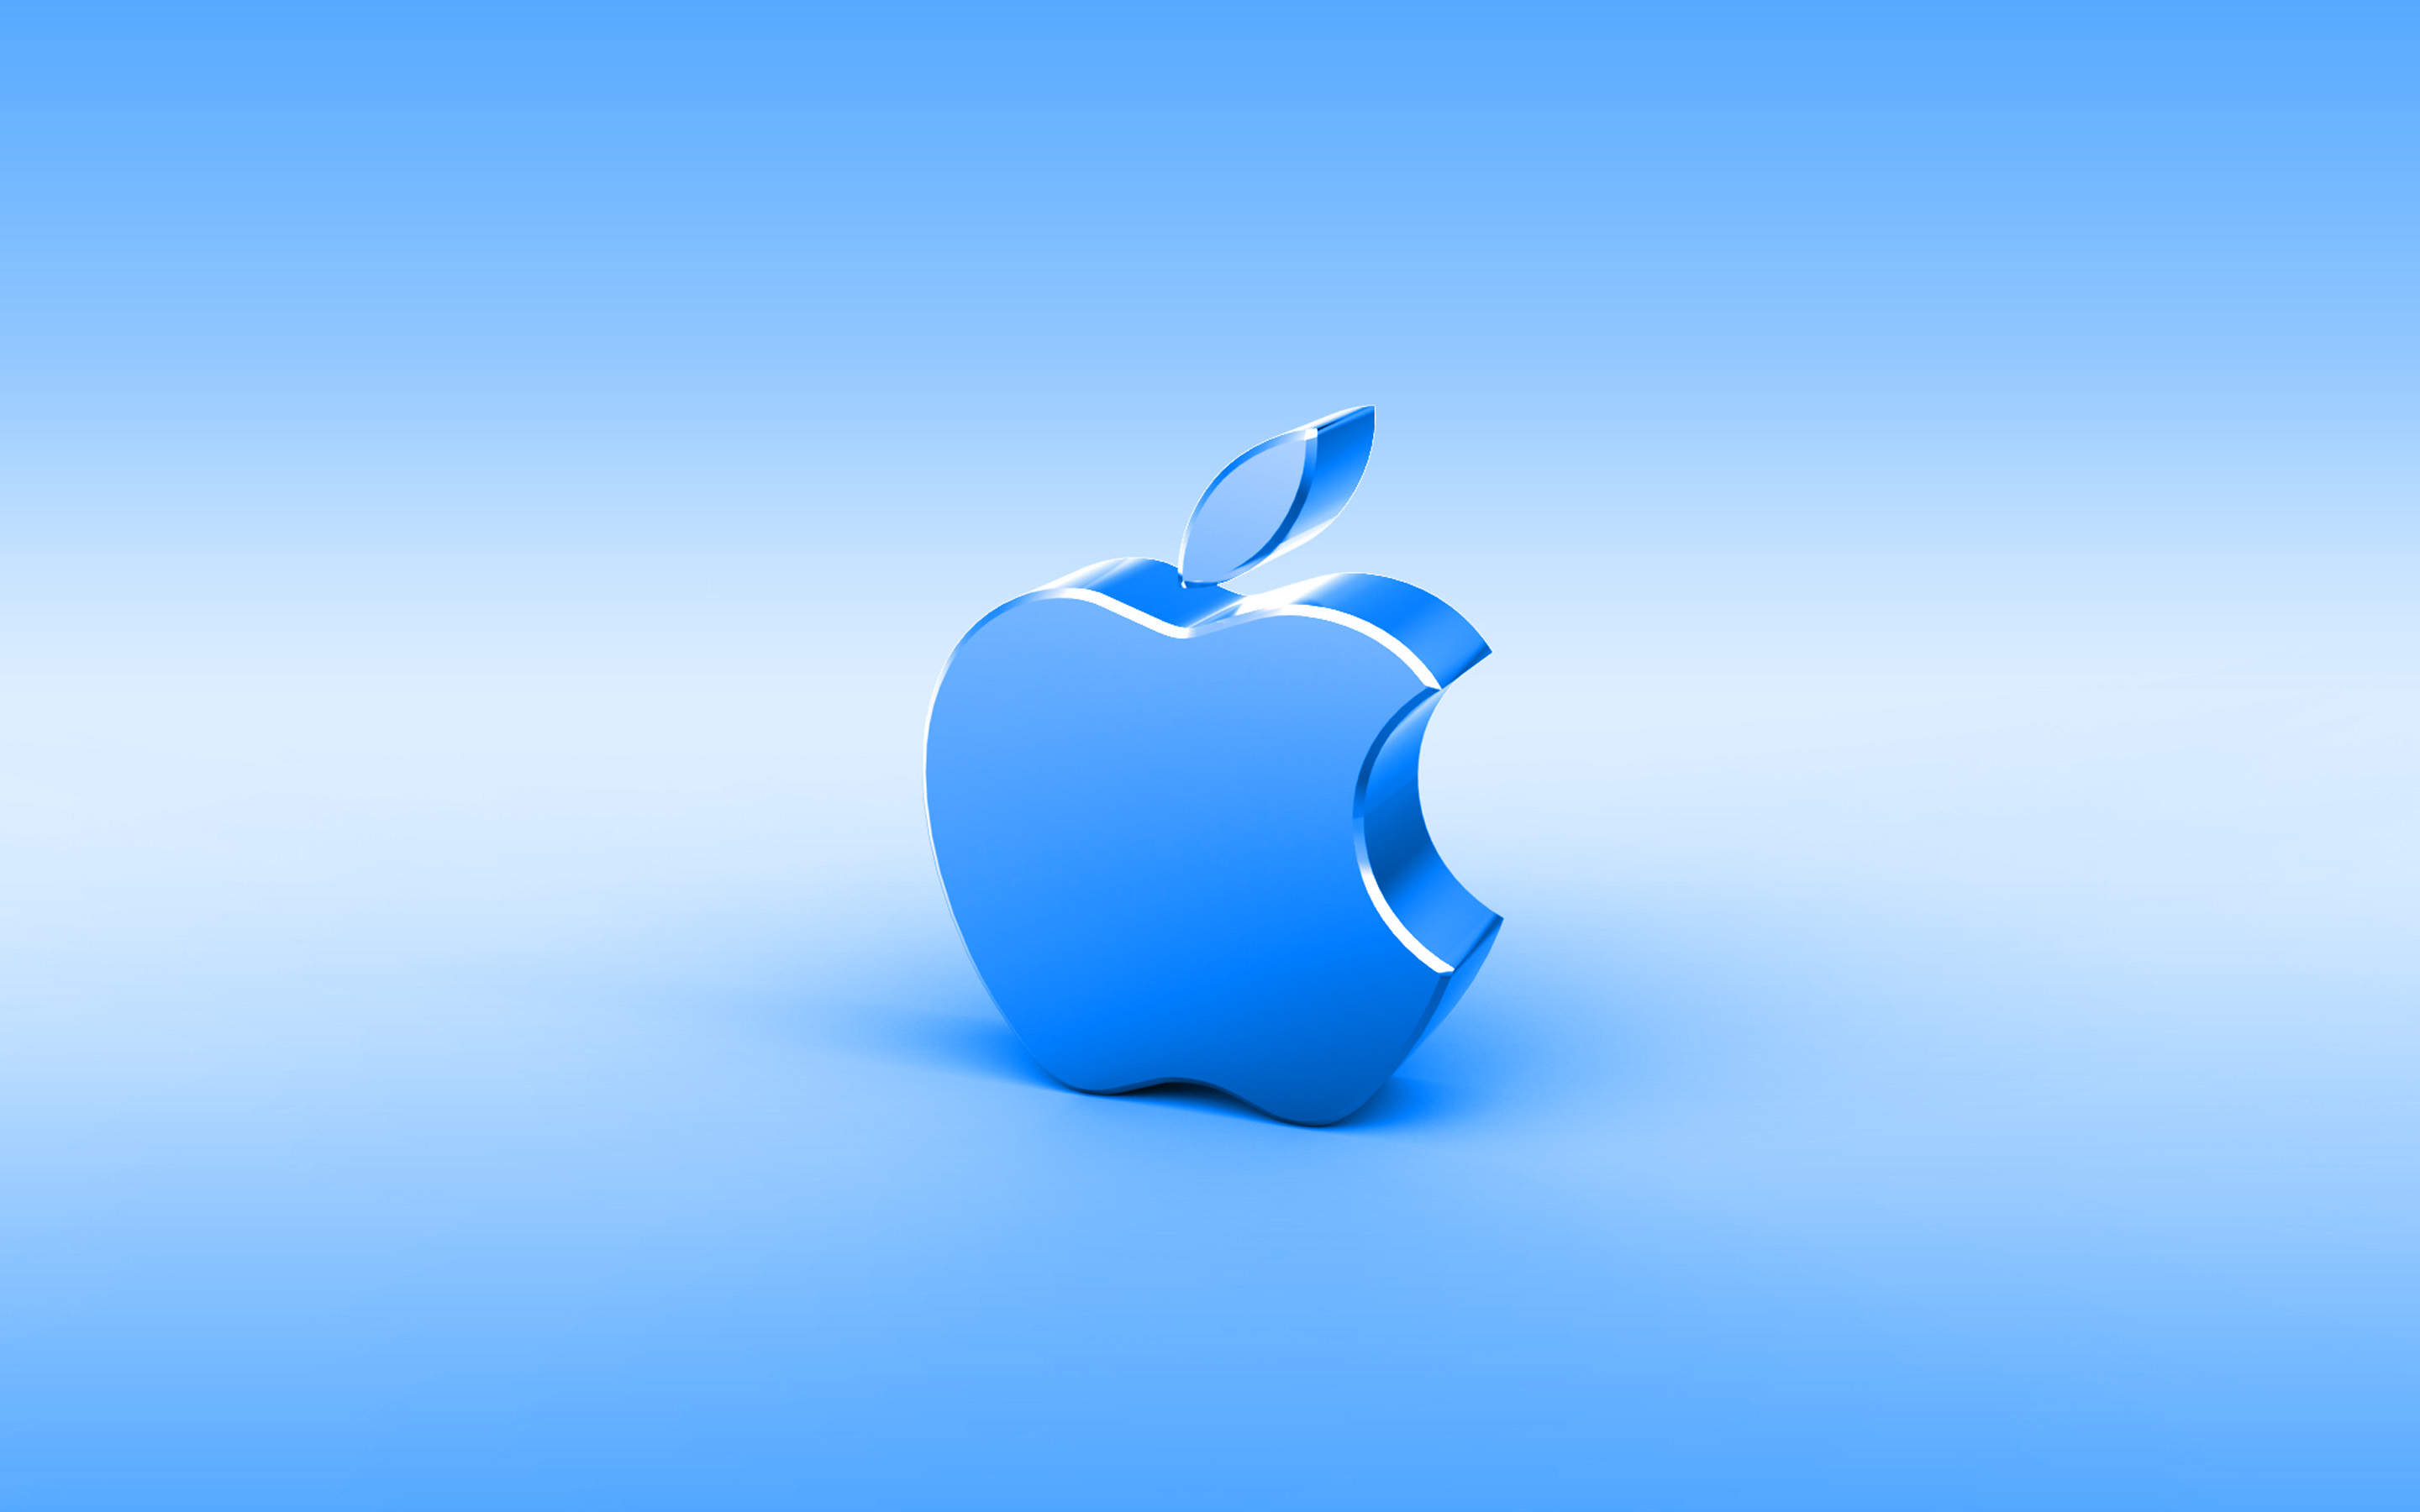 Descargar fondos de pantalla Apple azul logo en 3D, mínimo, fondo azul,  logotipo de Apple, creativo, de metal logotipo de Apple, Apple logo en 3D,  obras de arte, Apple monitor con una